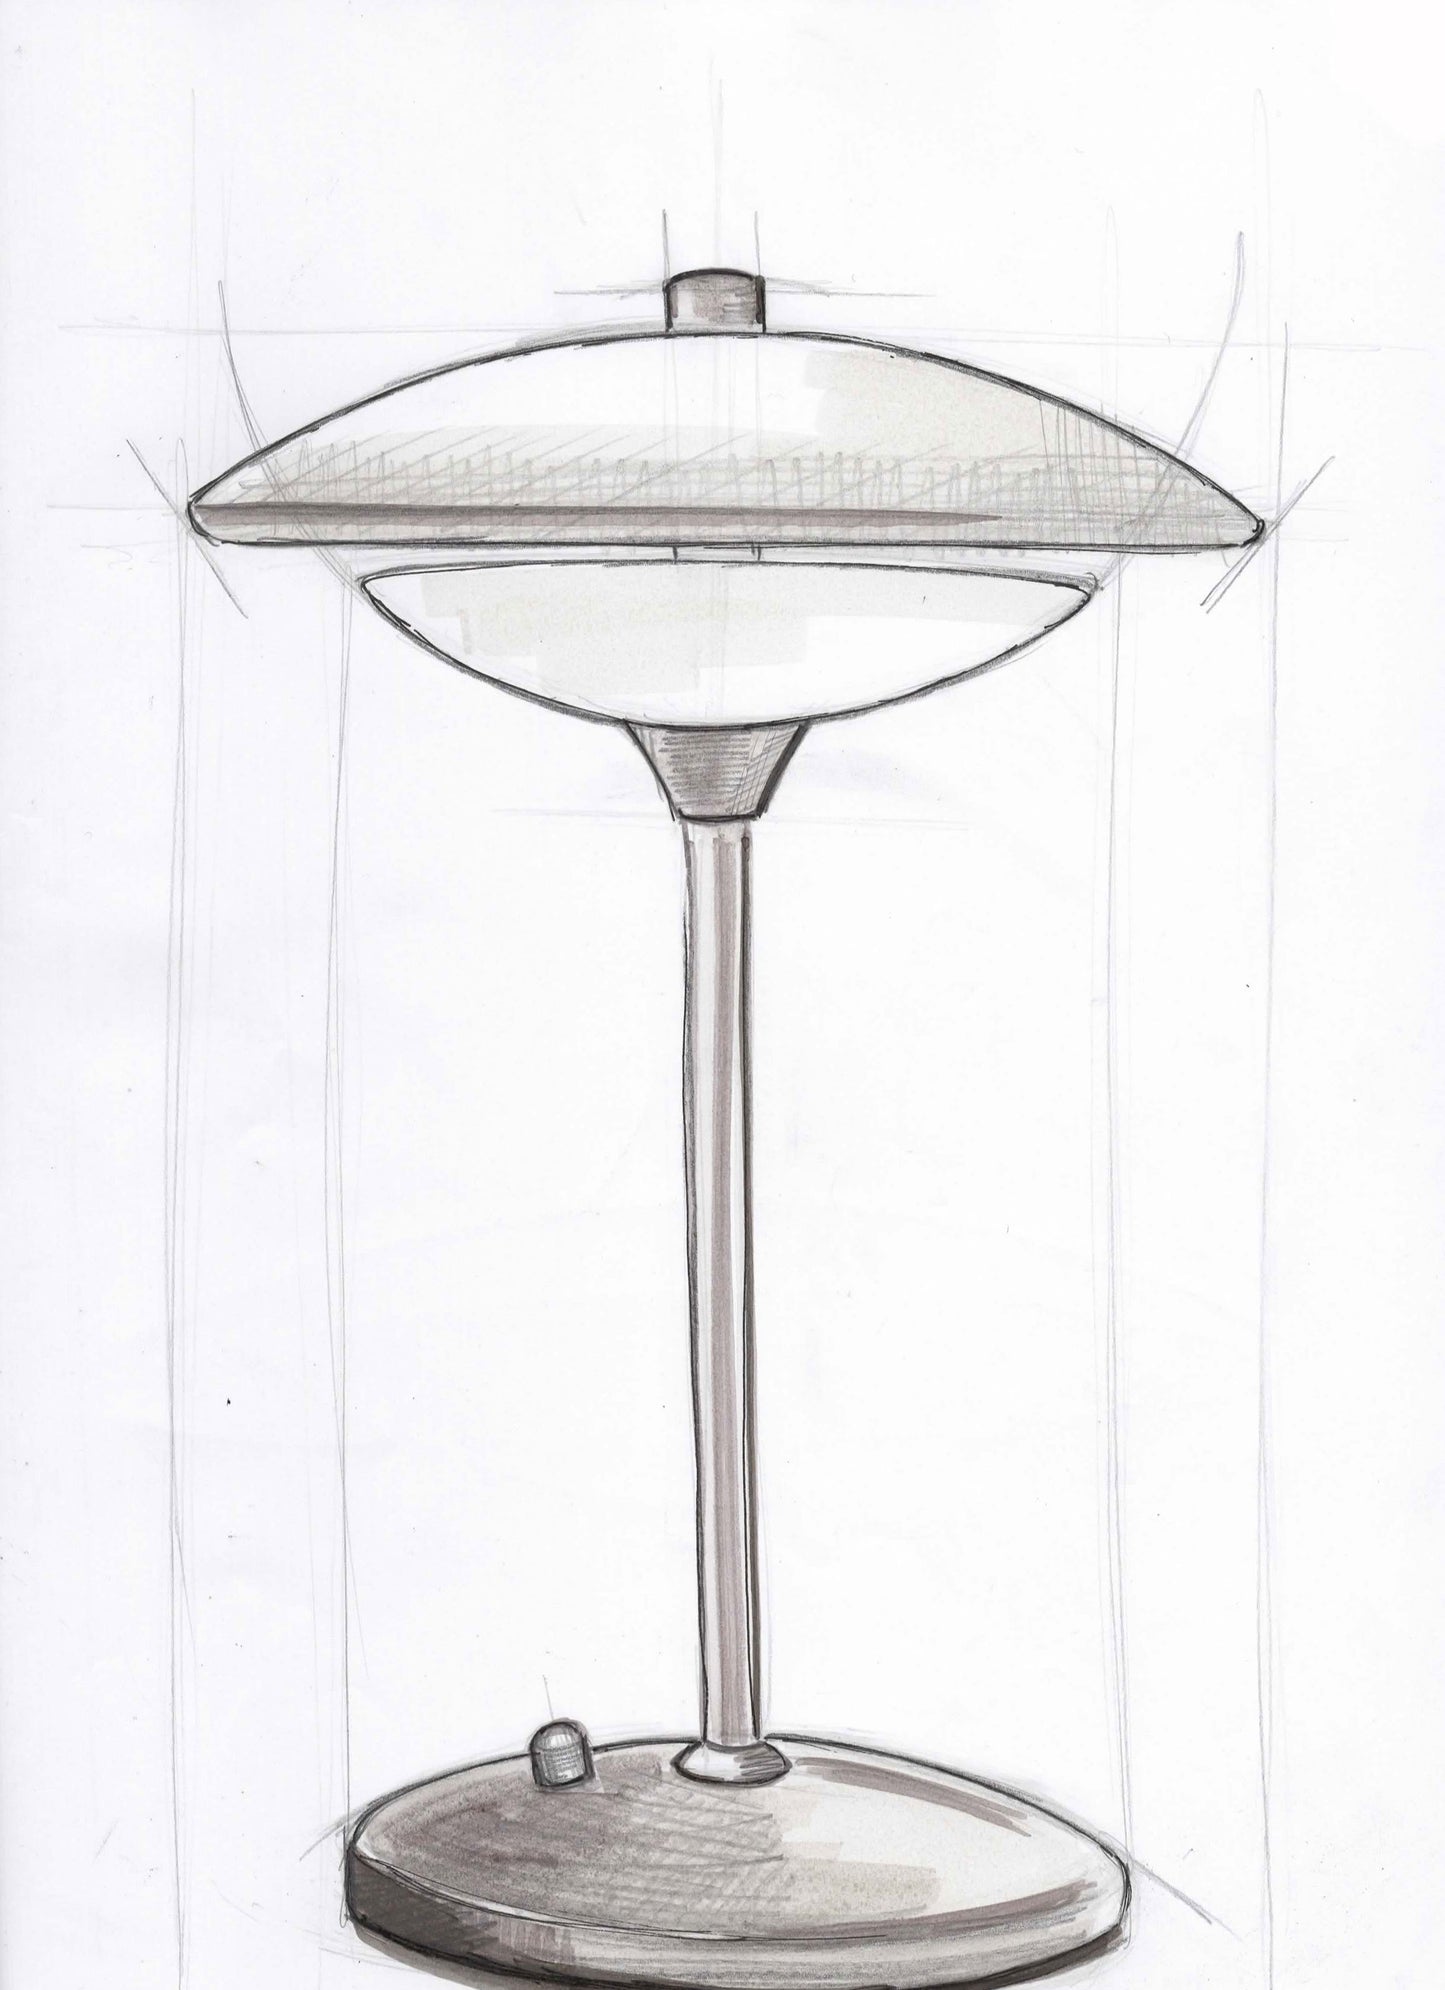 Halo Design Baroni bordlampe Ø30 - Opal/Black